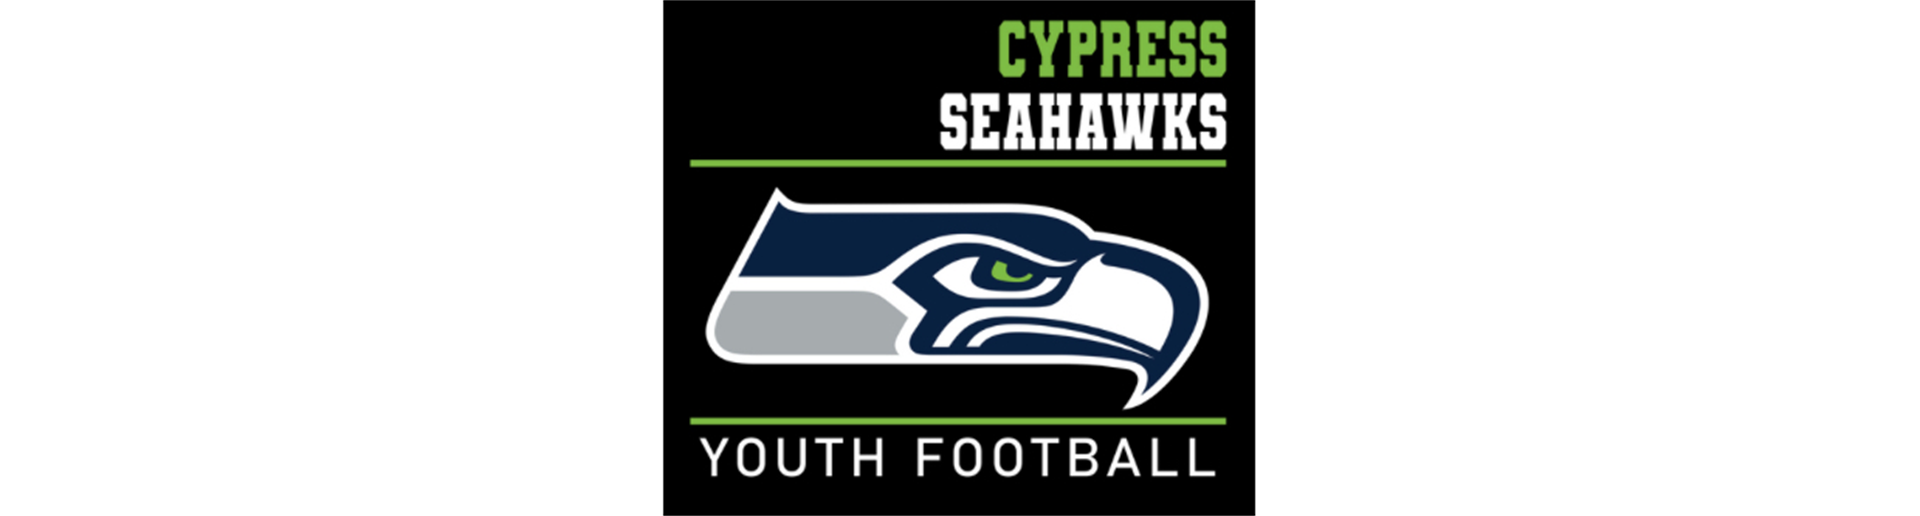 Cypress Seahawks Youth Football